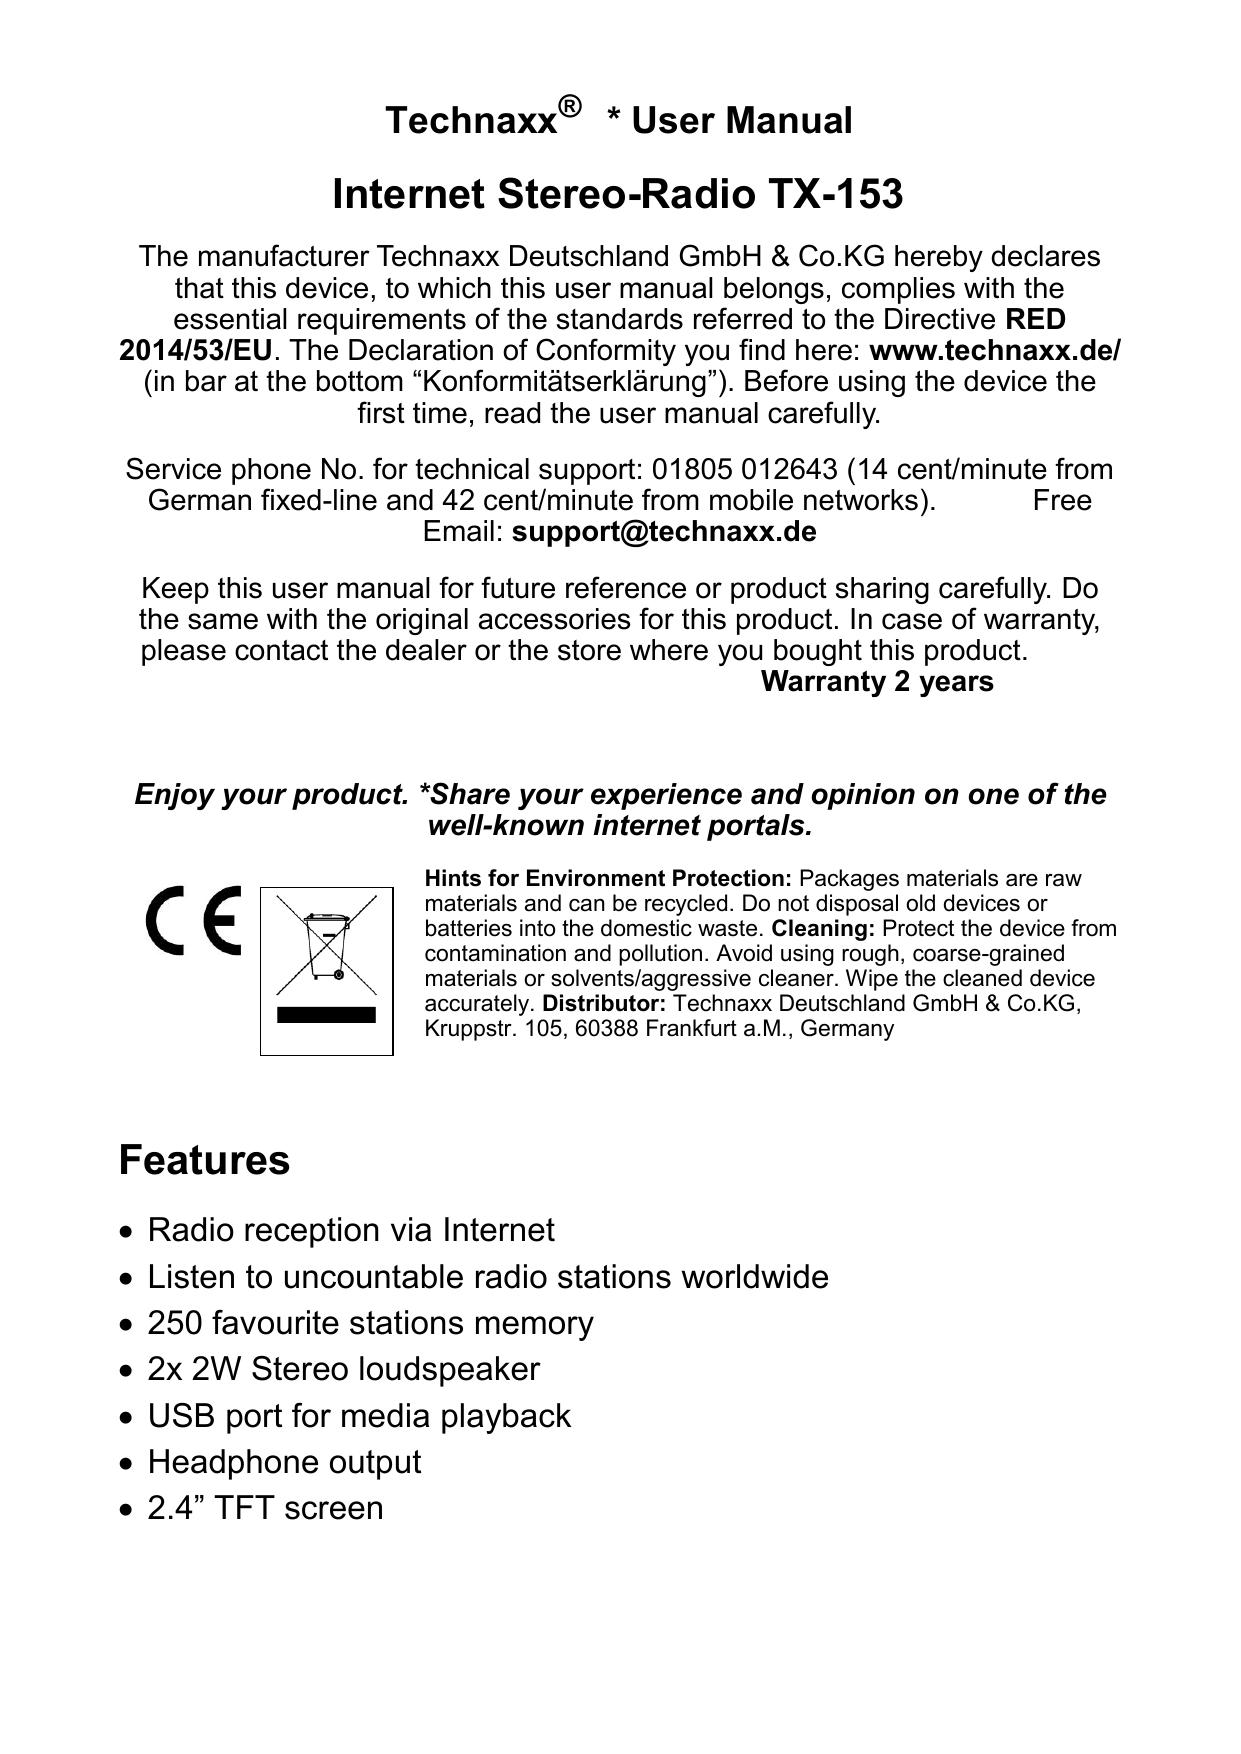 Technaxx TX-153 Internetradio | Manual Manualzz Owner\'s